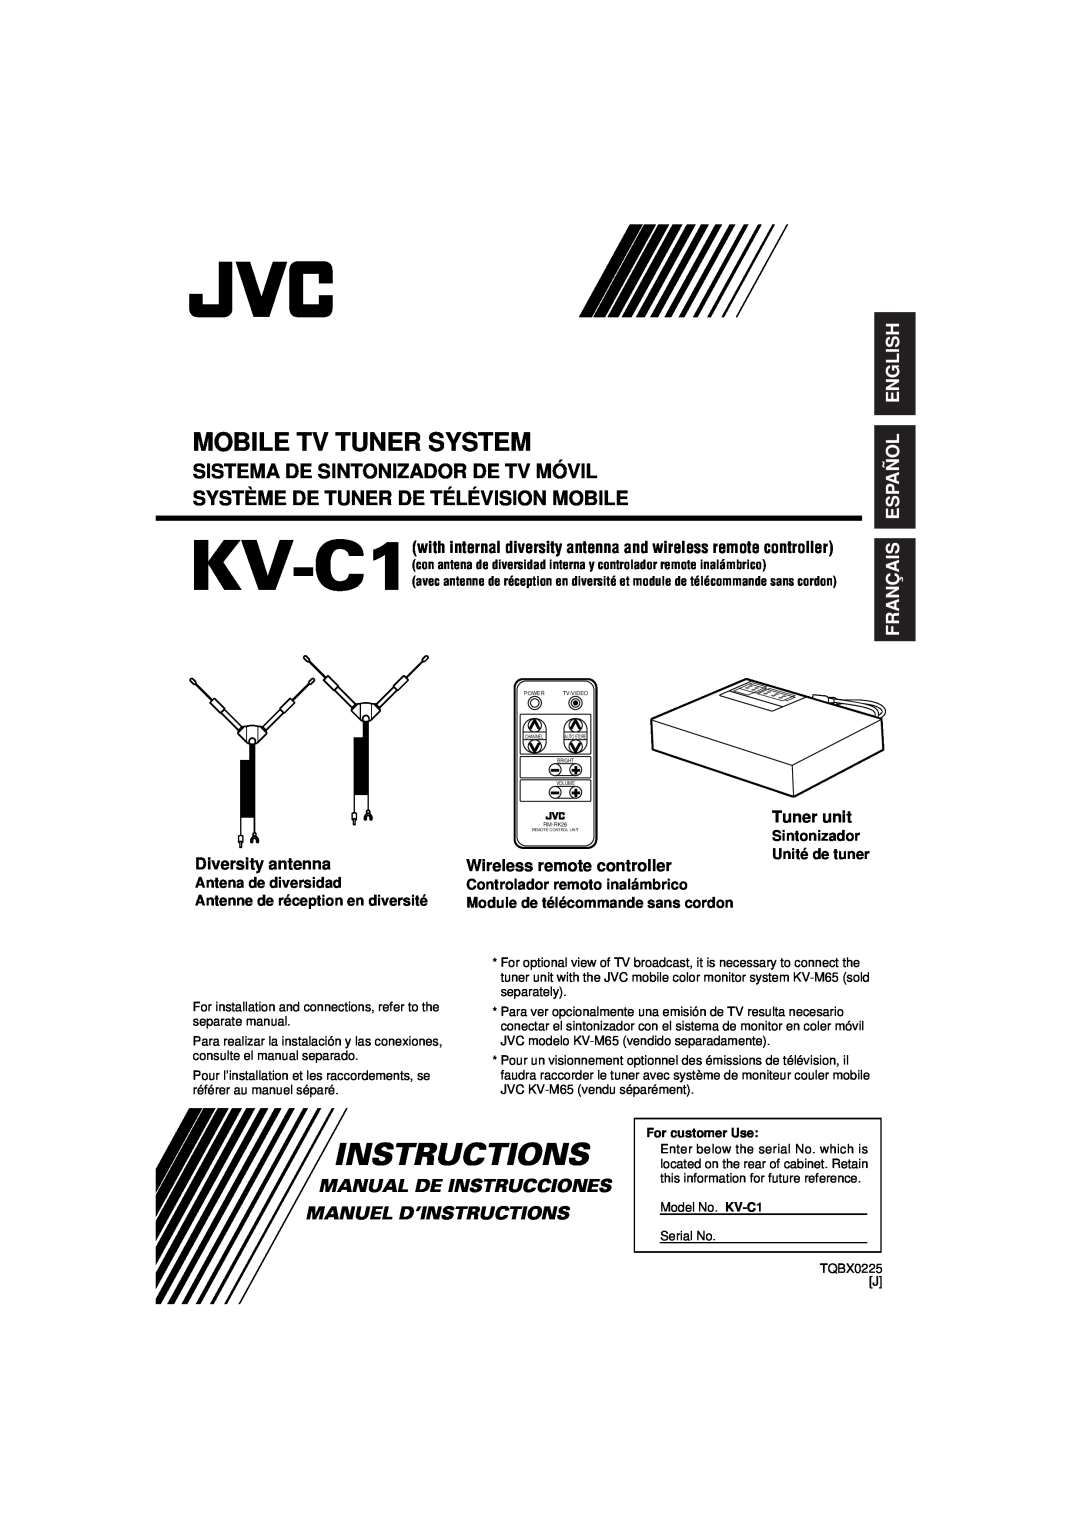 JVC KV-C1 manual Français Español English, Tuner unit, Diversity antenna, Wireless remote controller, Instructions 